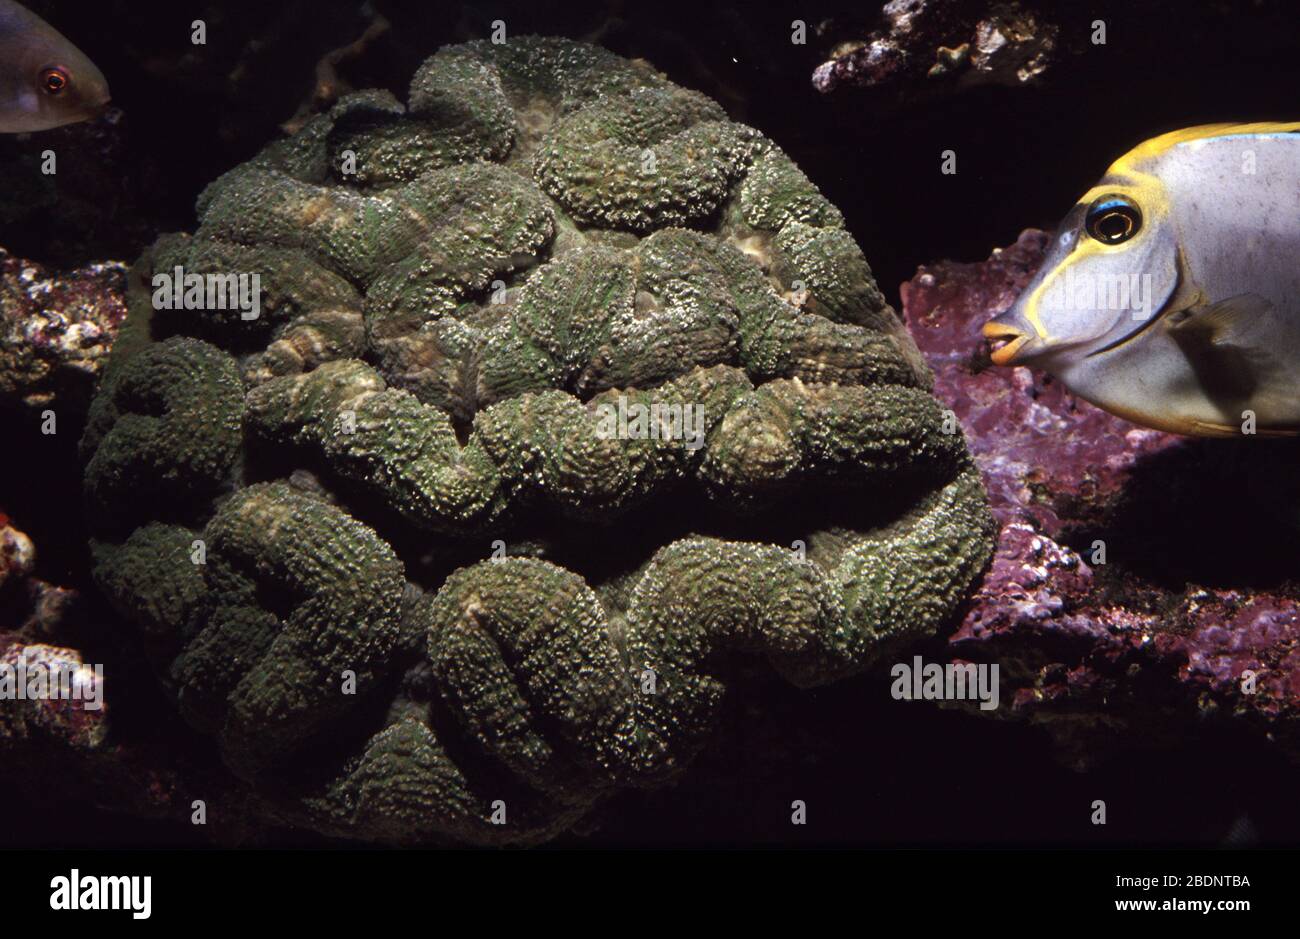 Lobed brain or cactus coral, Lobophyllia hemprichii Stock Photo